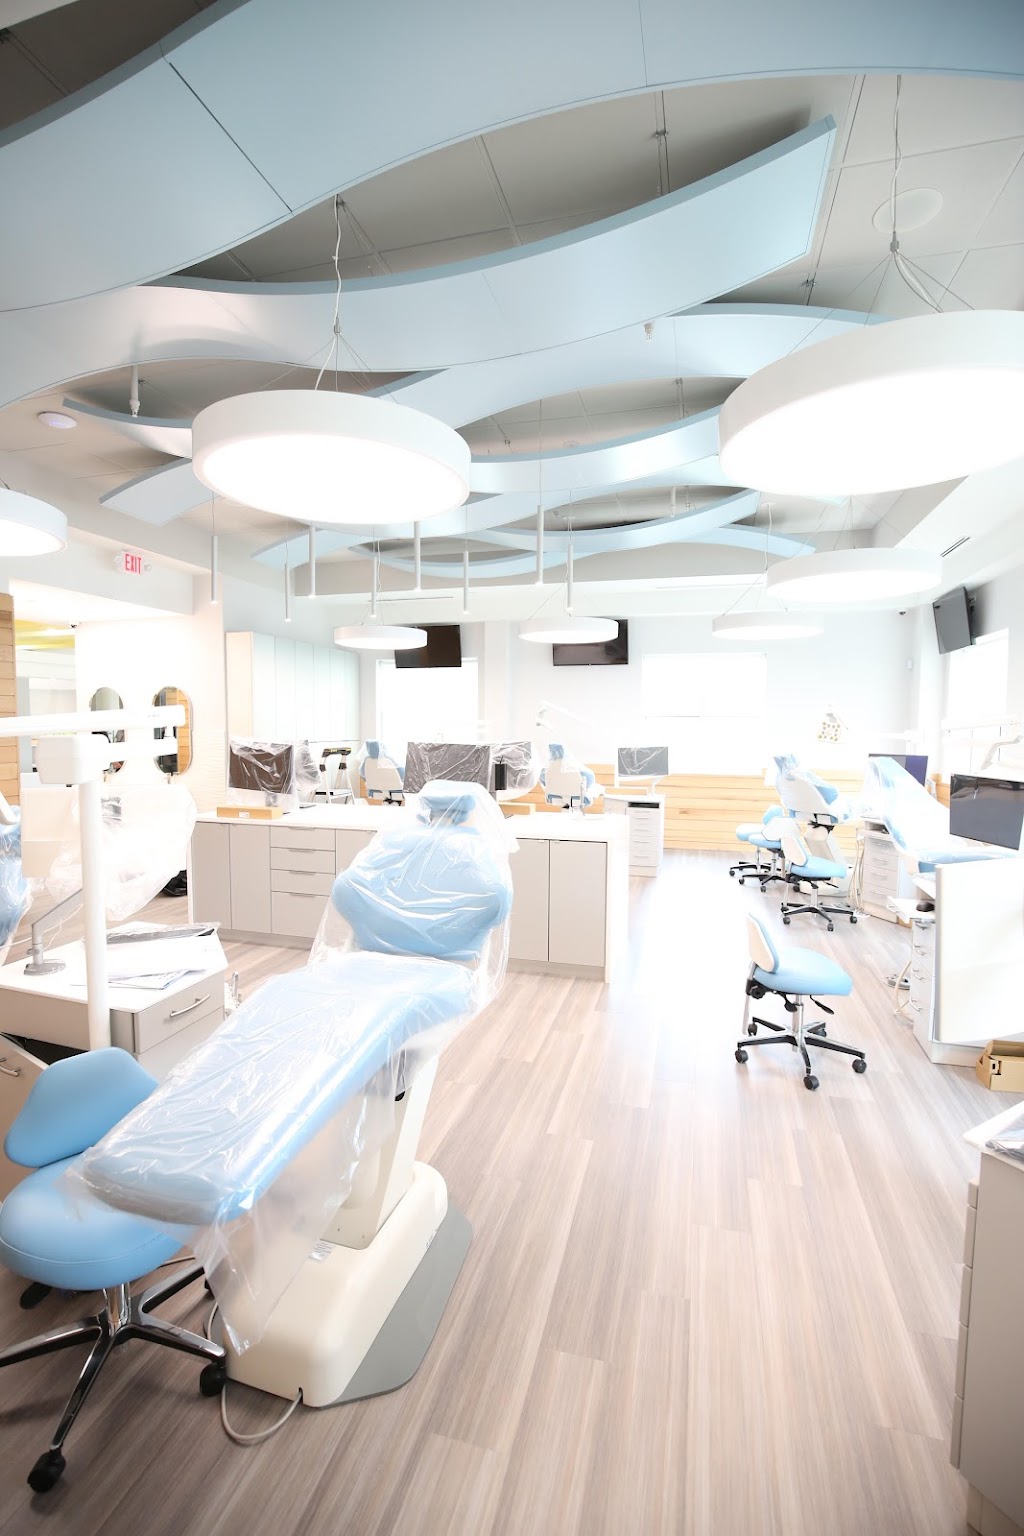 Smile Solutions Orthodontics | 3900 Park Ave #103, Edison, NJ 08820, USA | Phone: (732) 516-1999